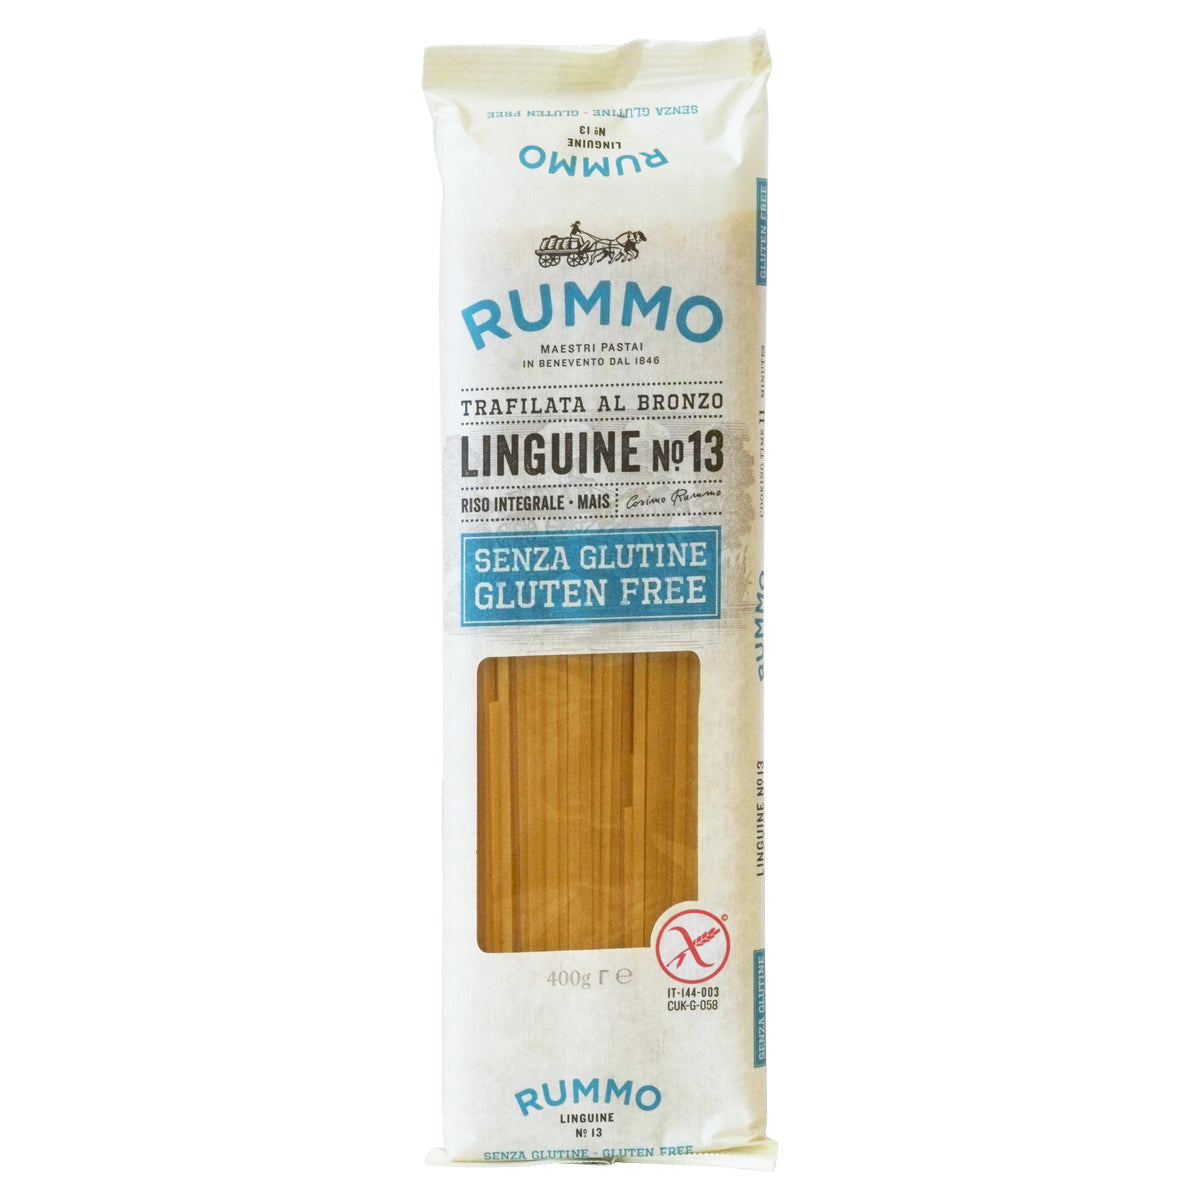 Gluten Free, Rummo, Linguine No. 13, 400g